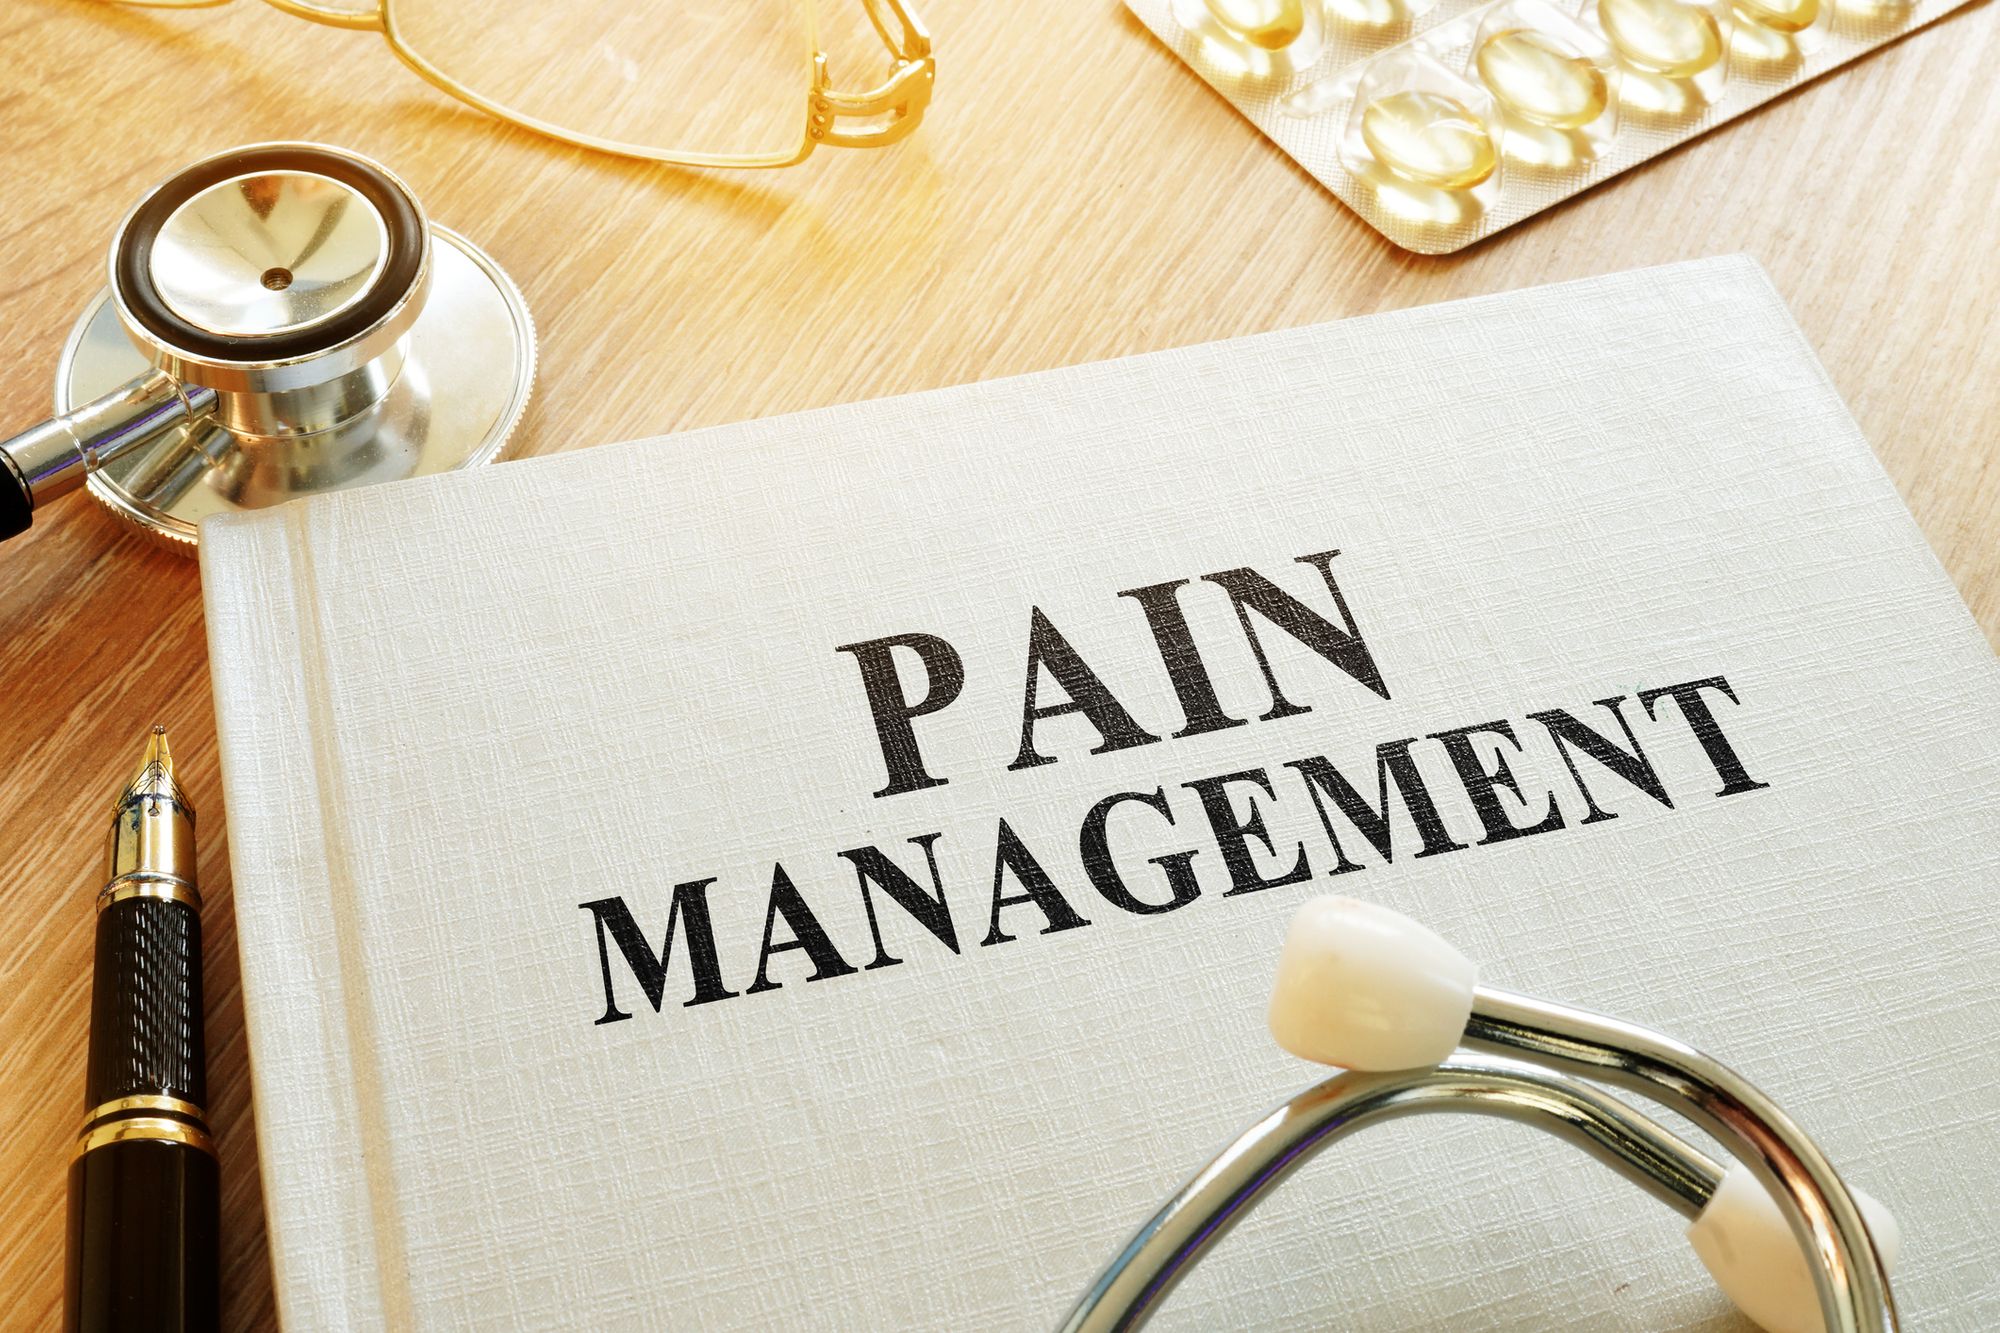 Book about Pain management. Chronic care management.